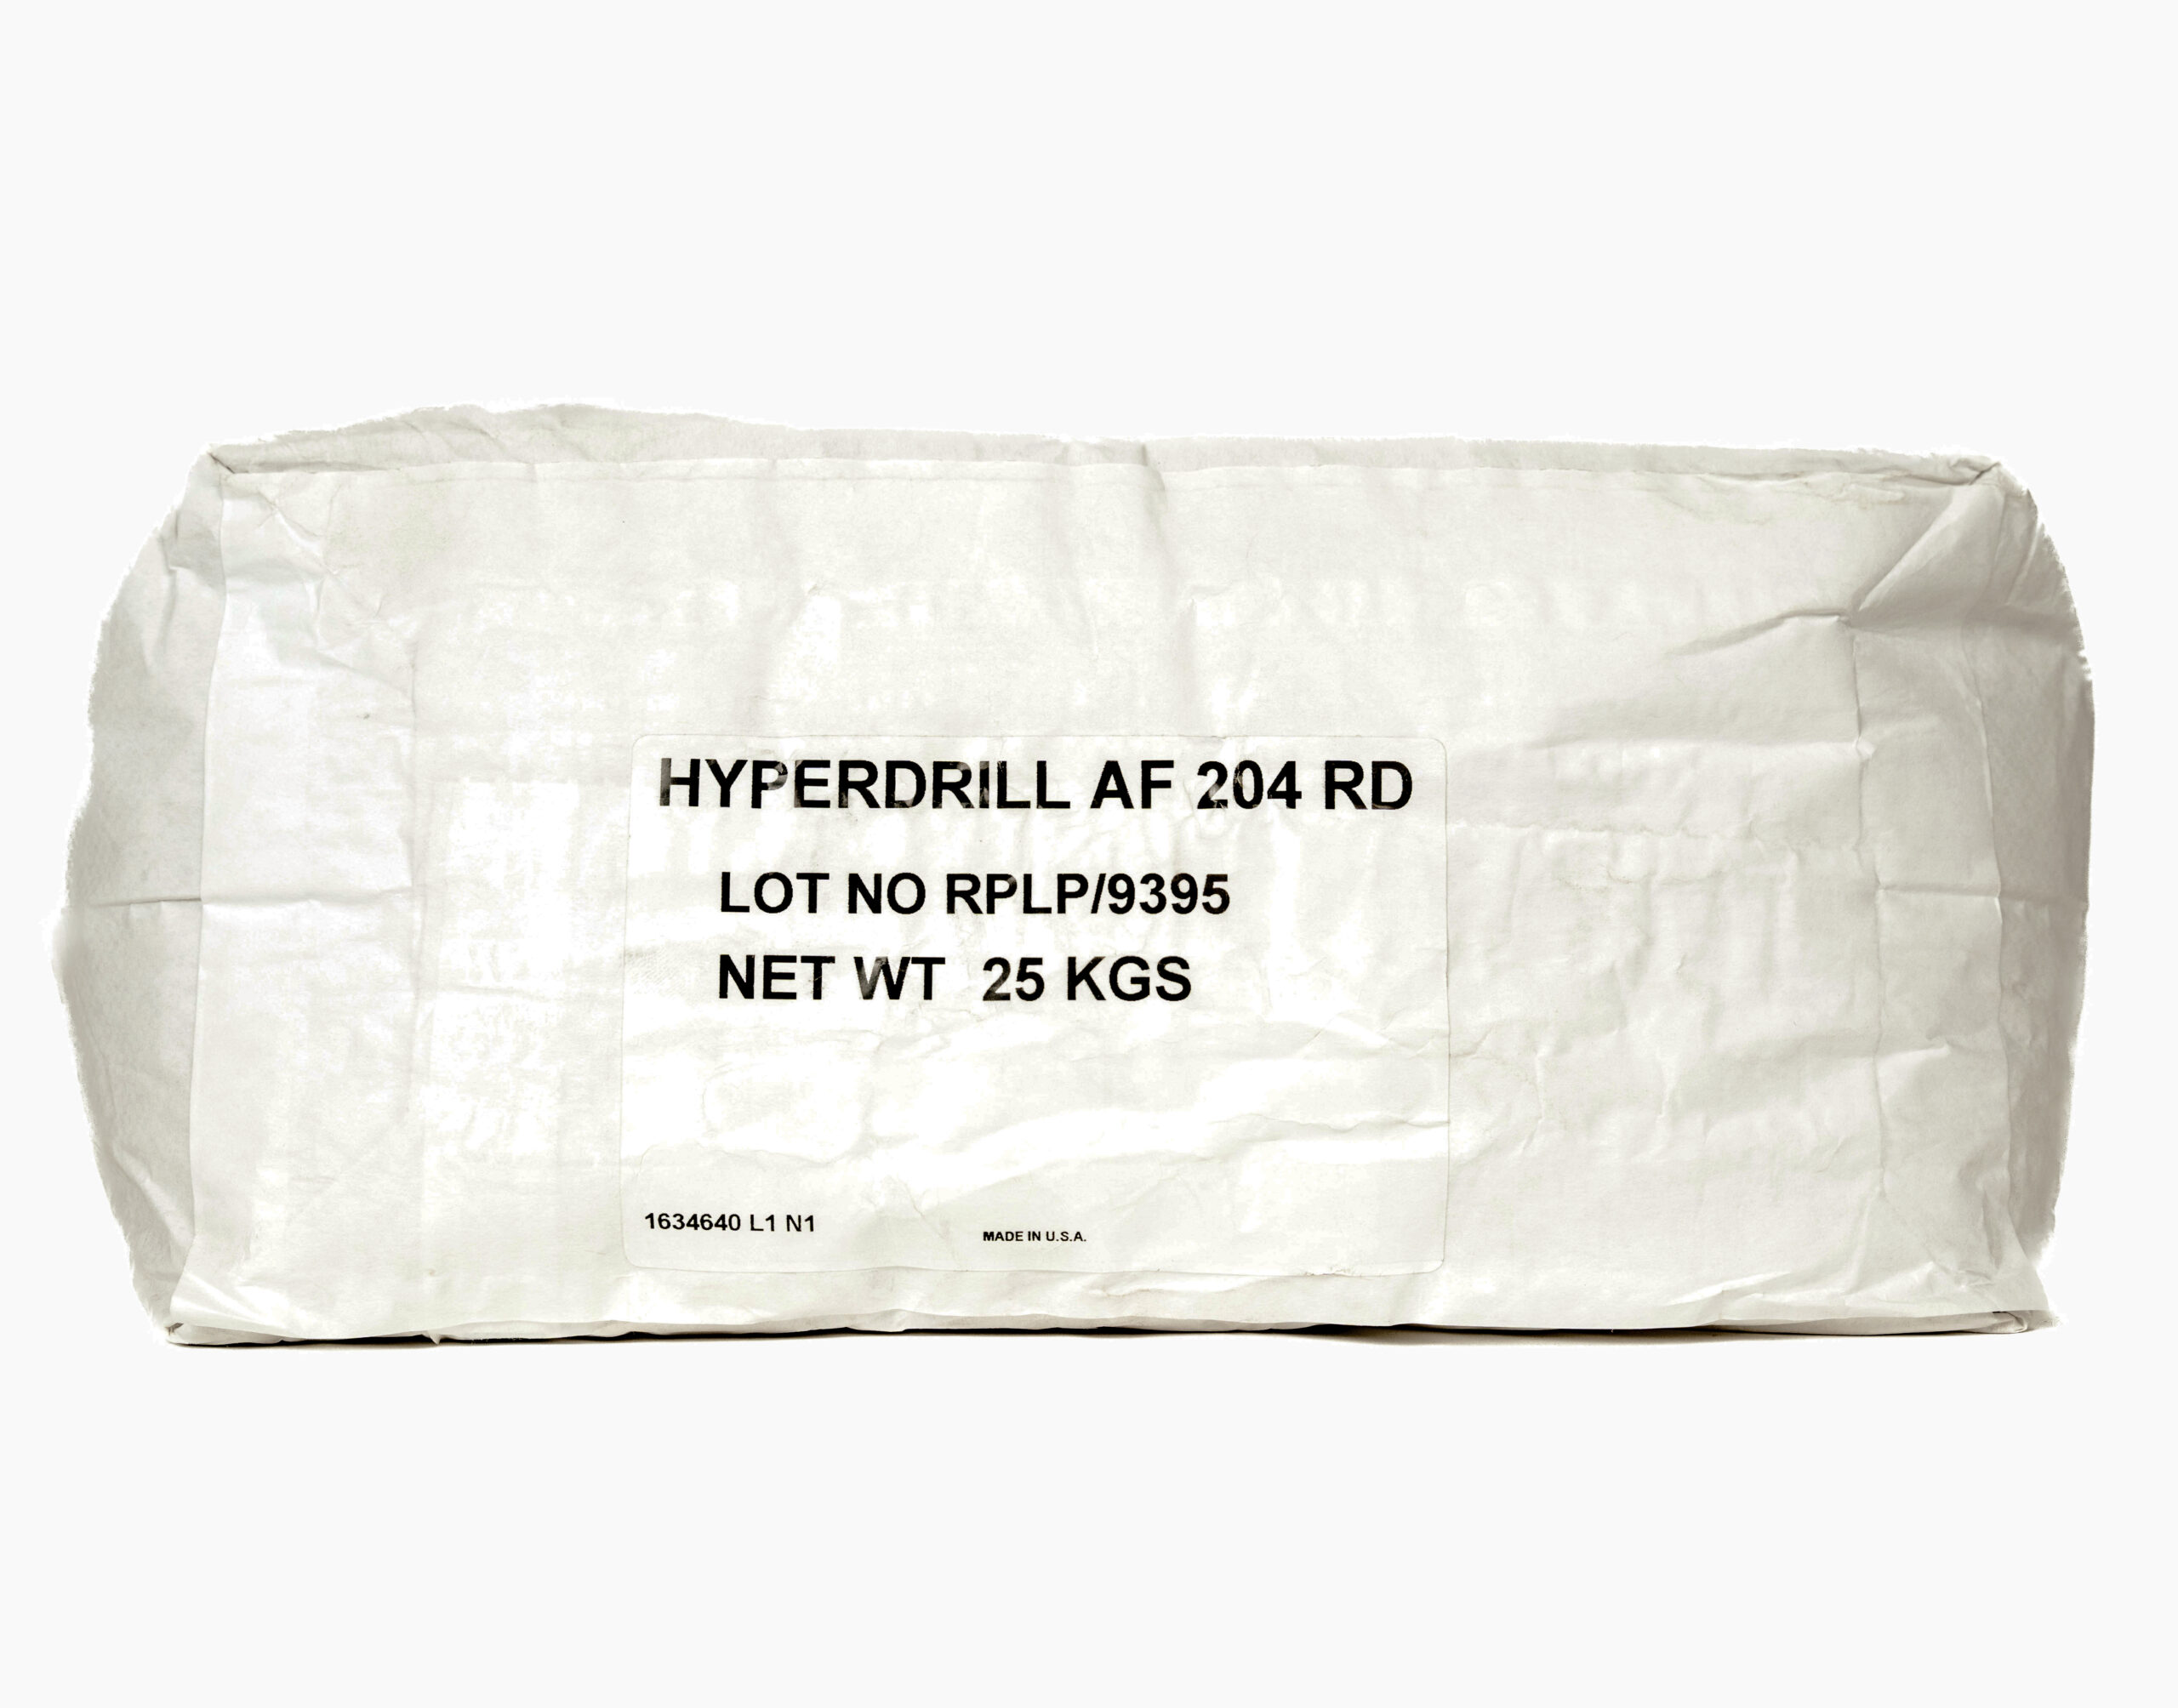 a bag of hyperdrill powder